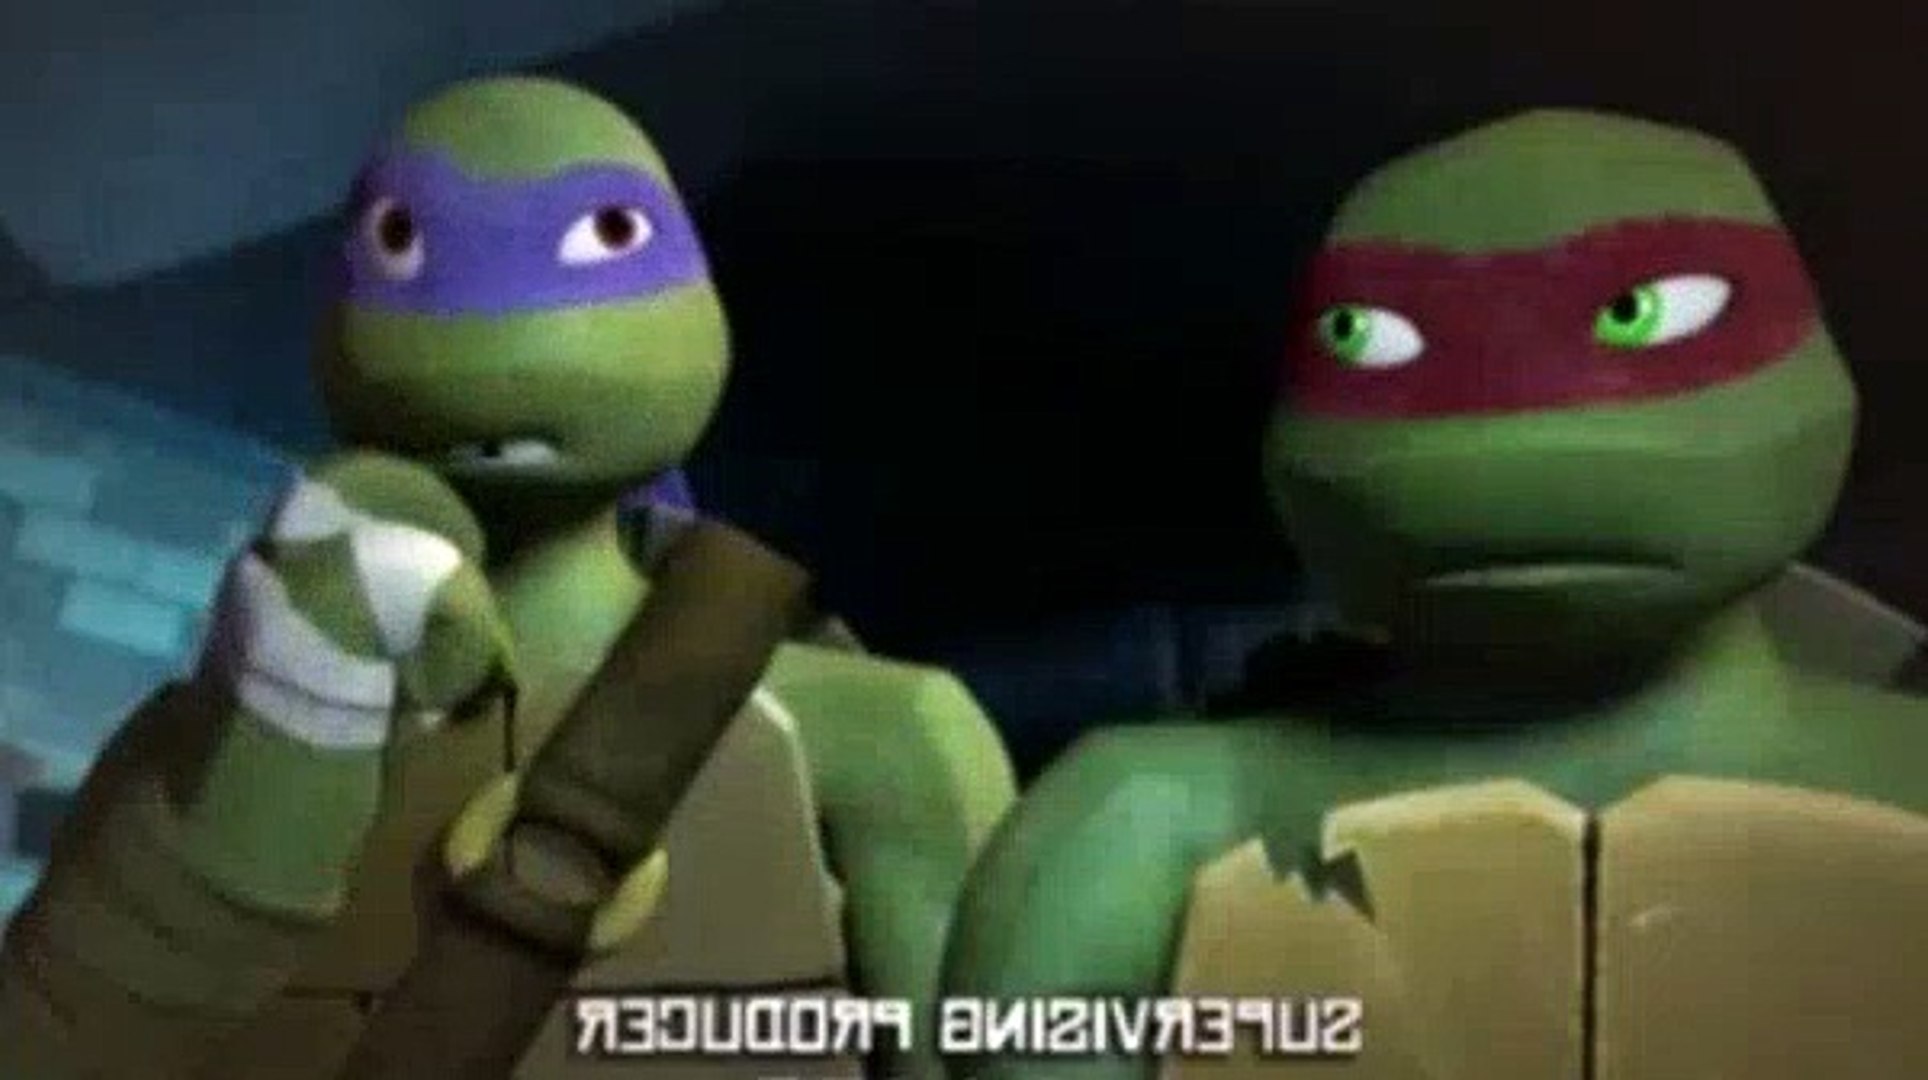 Teenage Mutant Ninja Turtles Watch In English